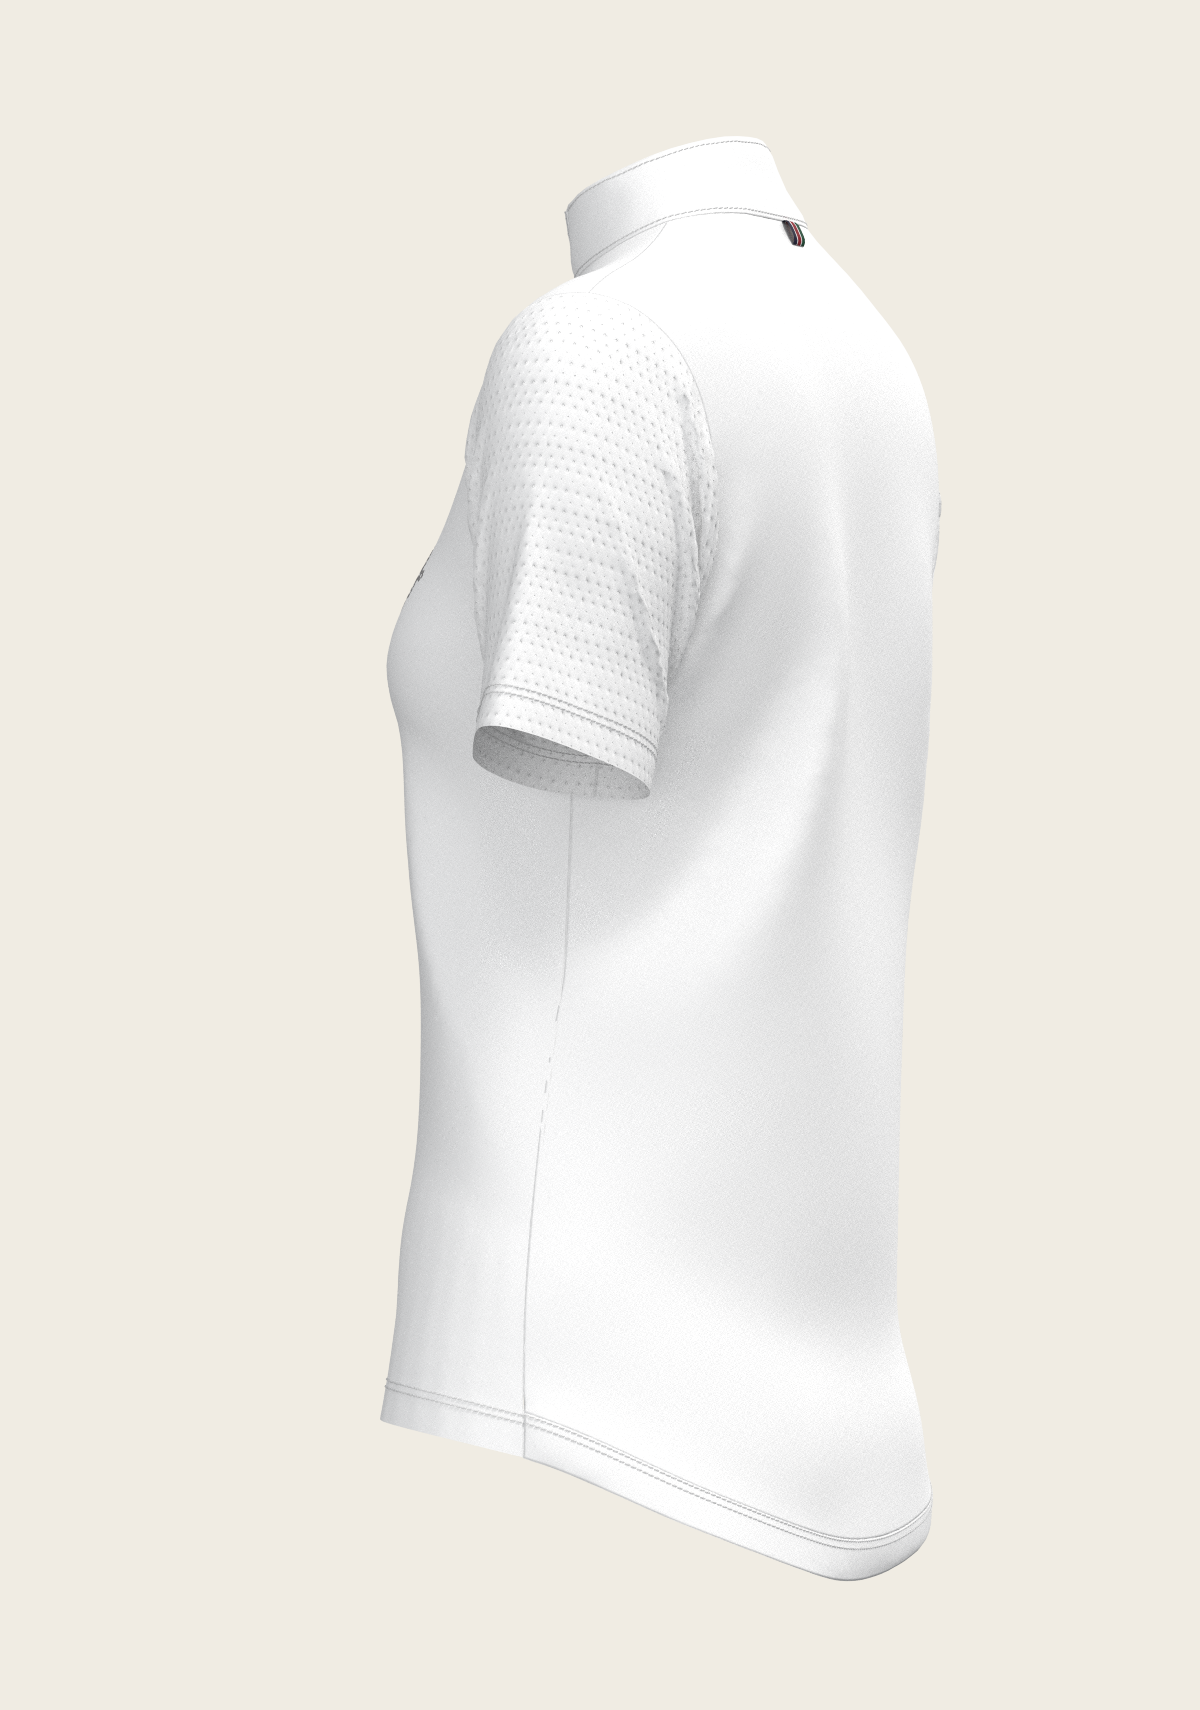  White with Navy Stripes Inner Details Short Sleeve Show Shirt